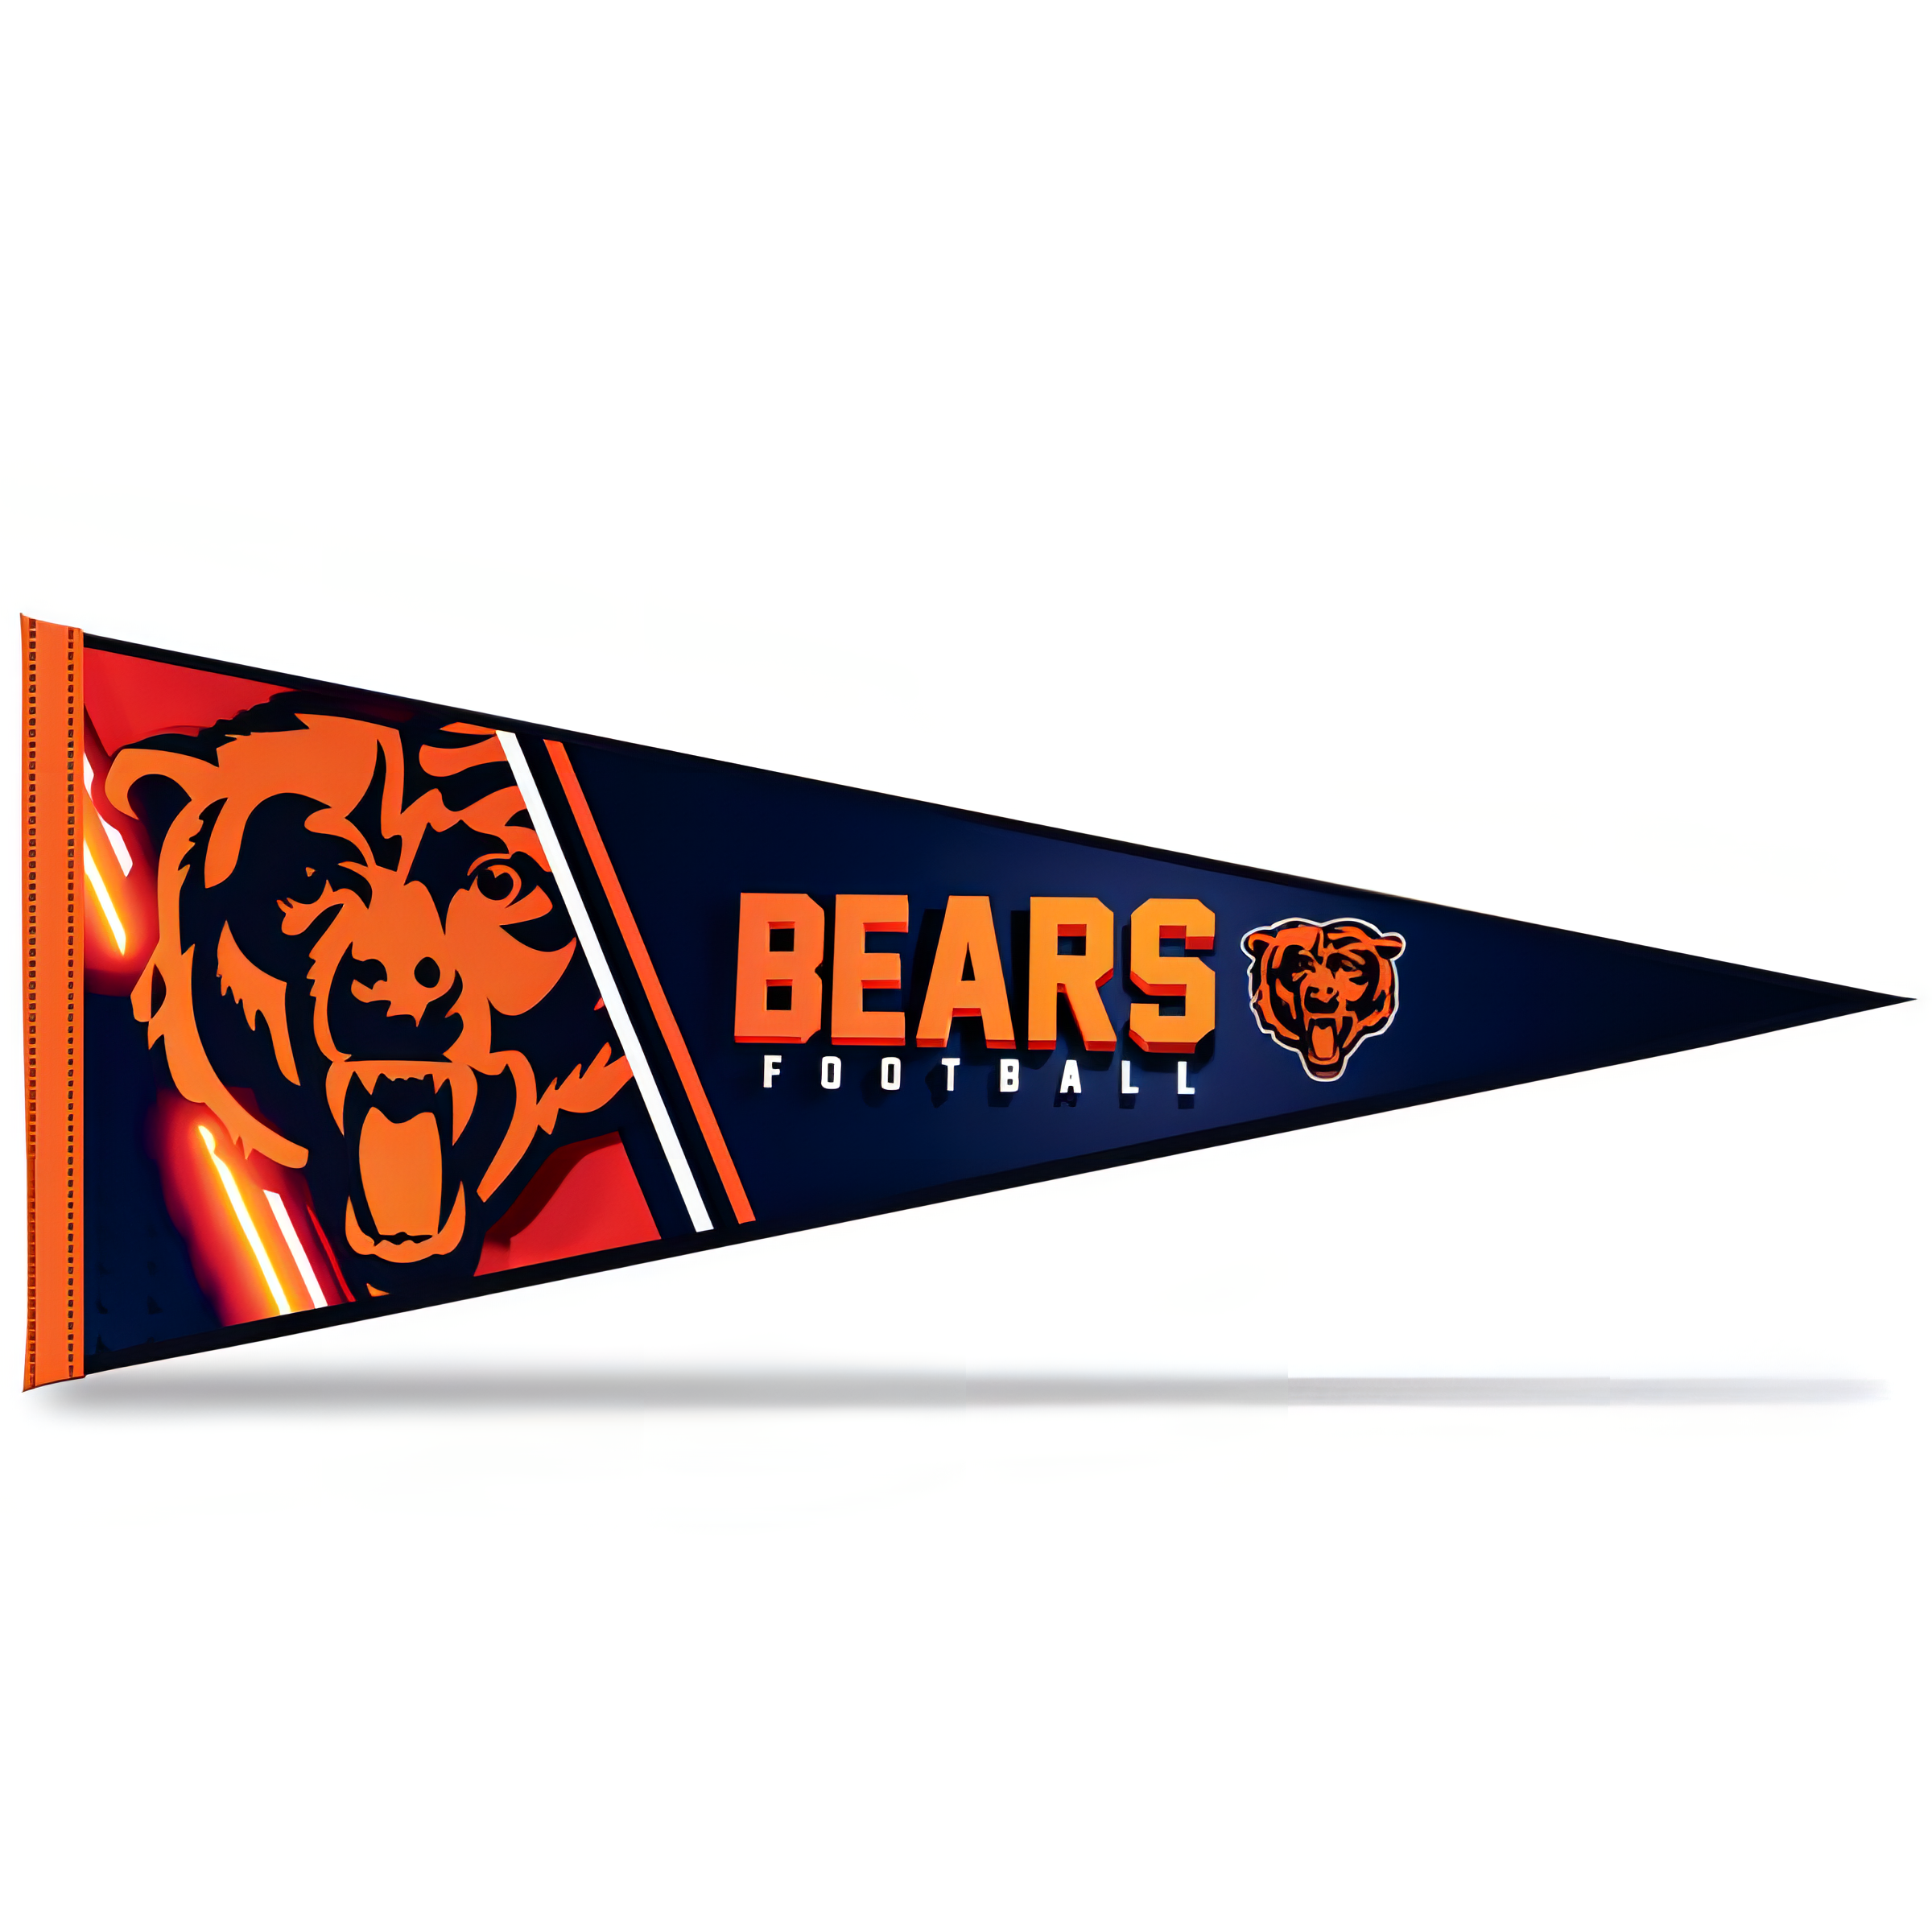 Banderín Decorativo Premium Pennant NFL Bears